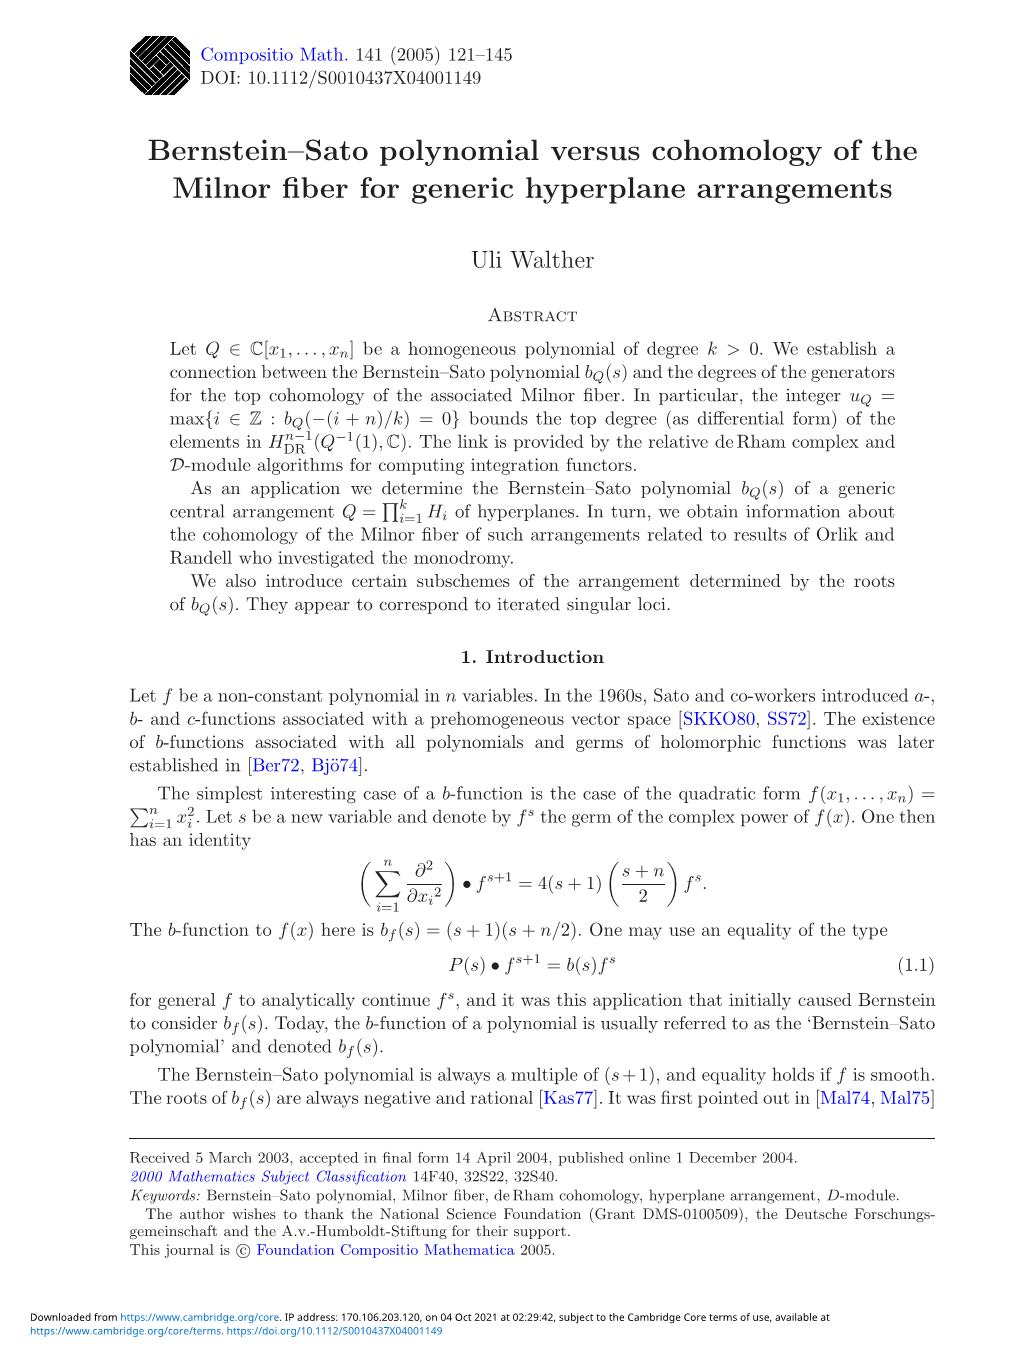 Sato Polynomial Versus Cohomology of the Milnor ﬁber for Generic Hyperplane Arrangements